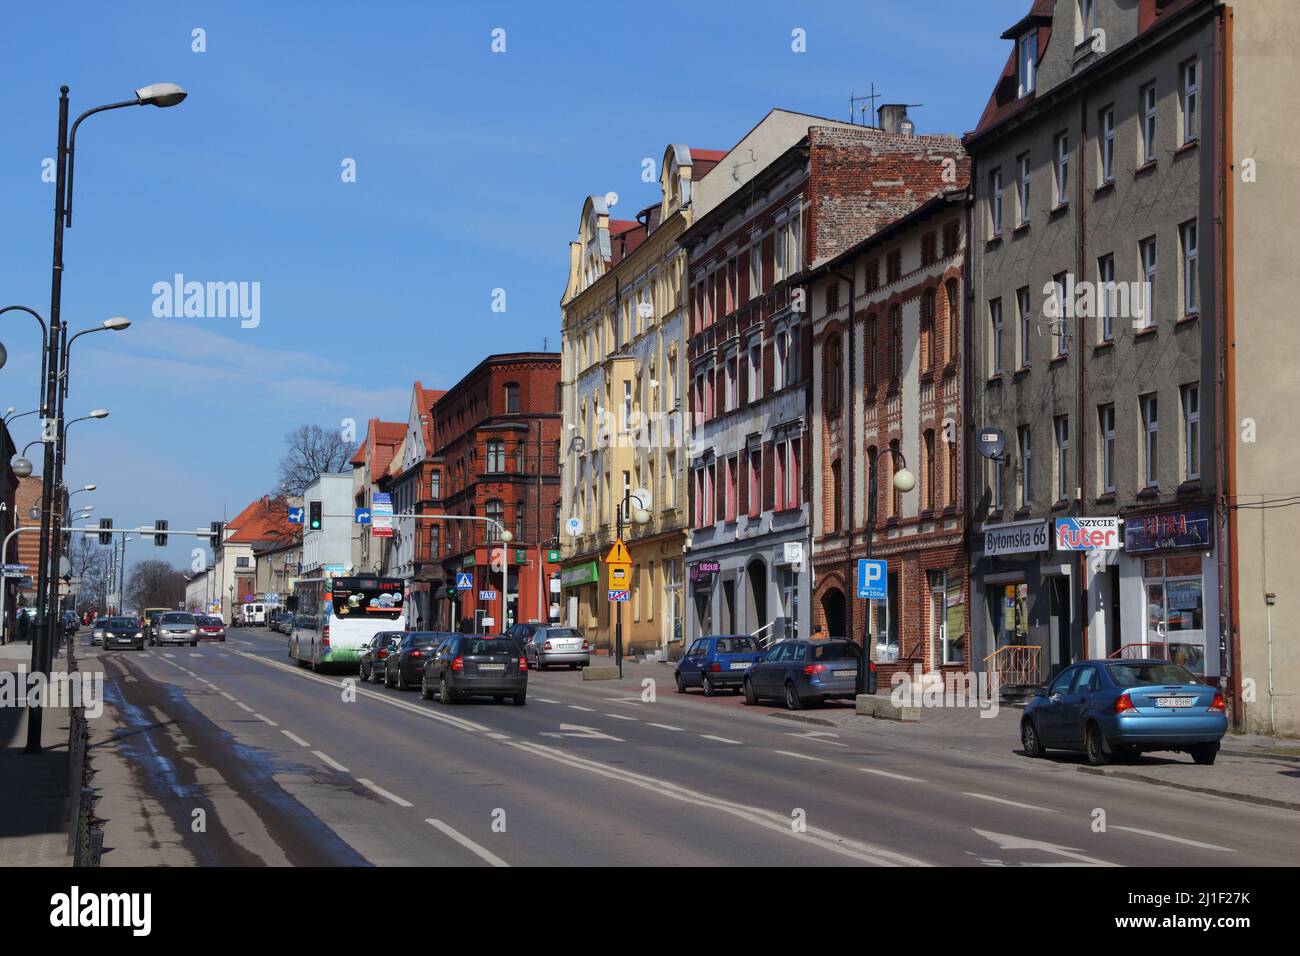 PIEKARY SLASKIE, POLAND - MARCH 9, 2015: Traffic in Piekary Slaskie, Poland. Piekary Slaskie is an important city in Slaskie region. Stock Photo